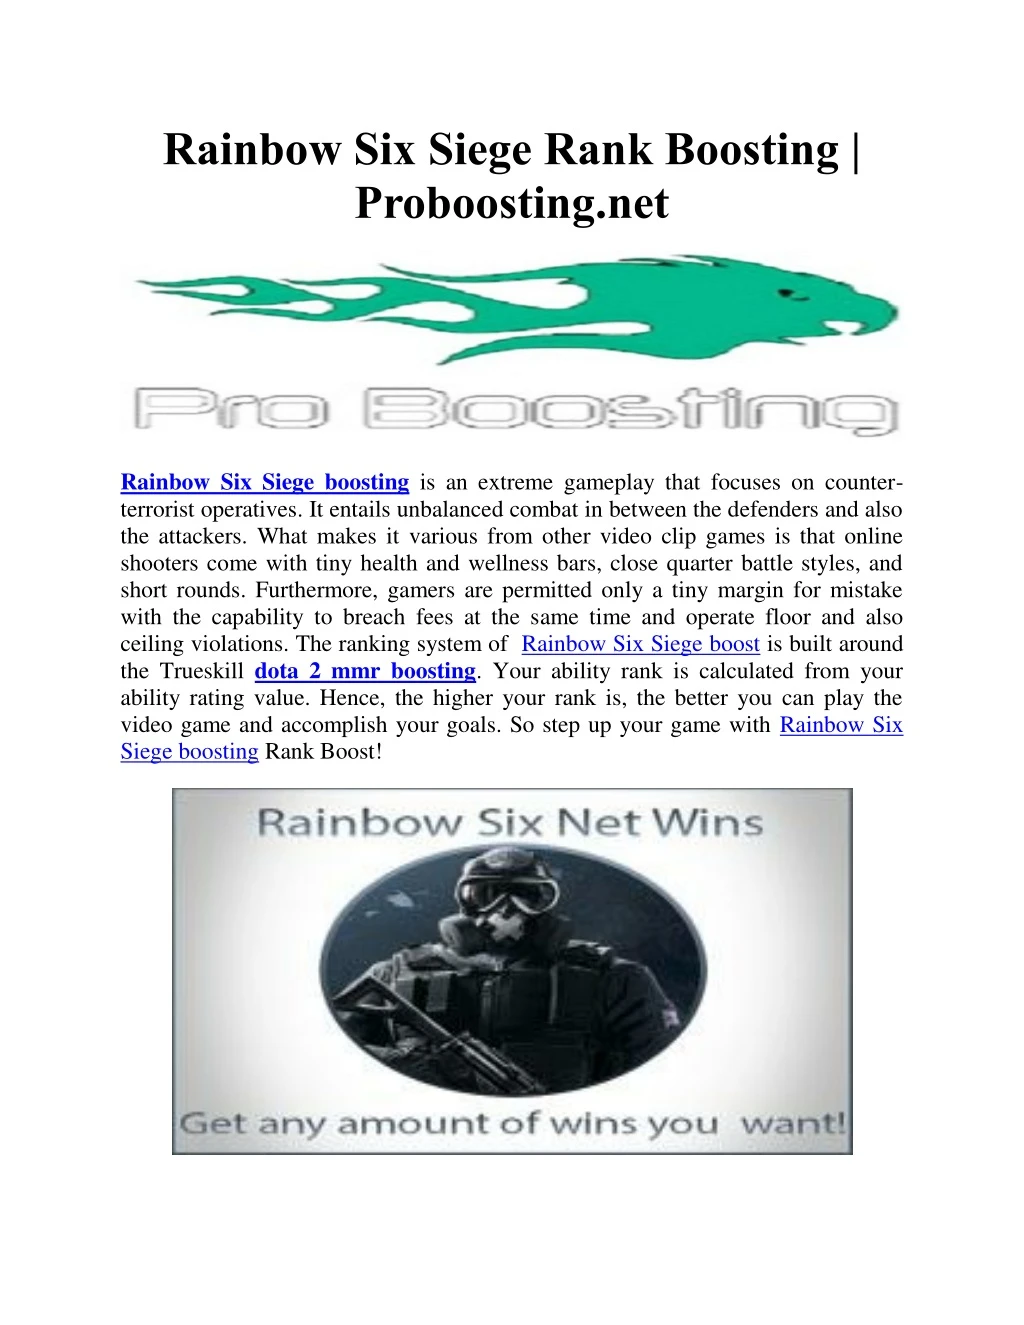 rainbow six siege rank boosting proboosting net